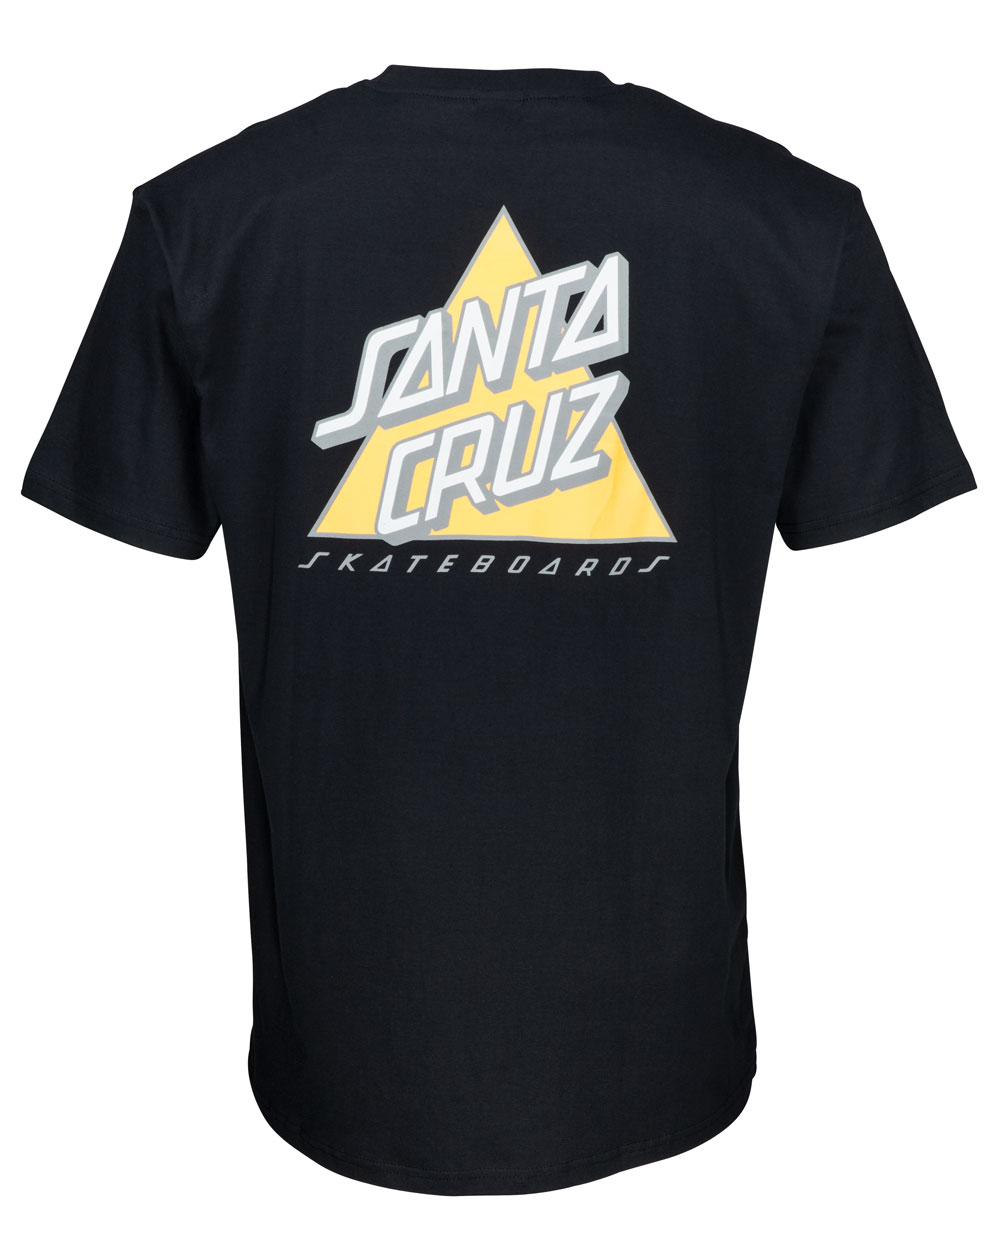 Santa Cruz Men's T-Shirt Not a Dot Black